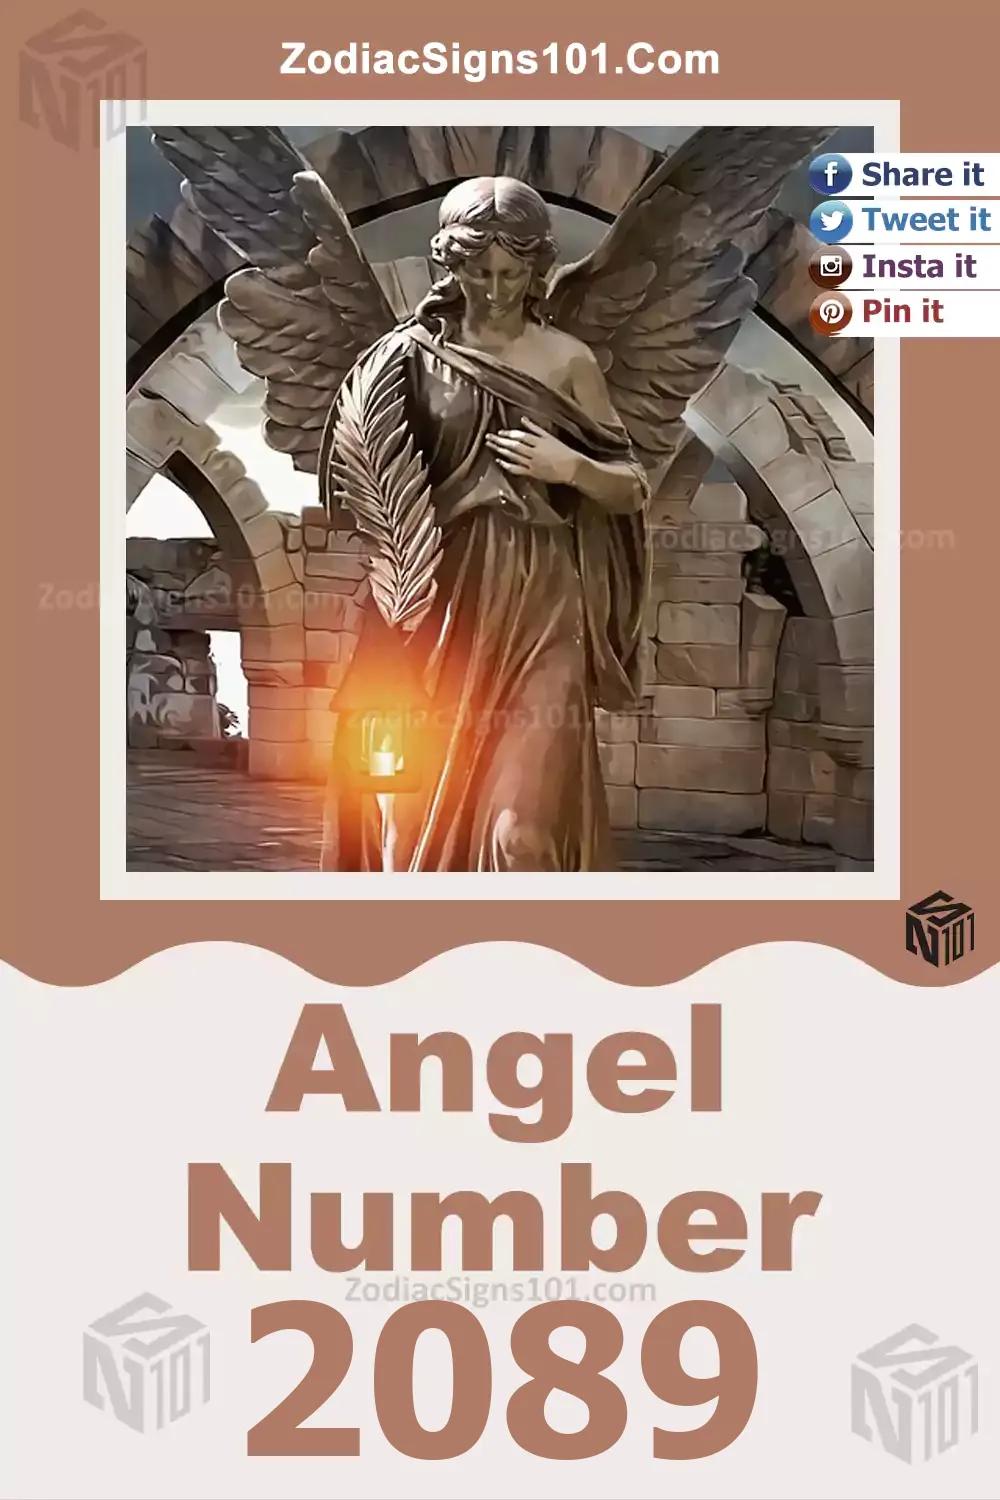 2089-Angel-Number-Meaning.jpg